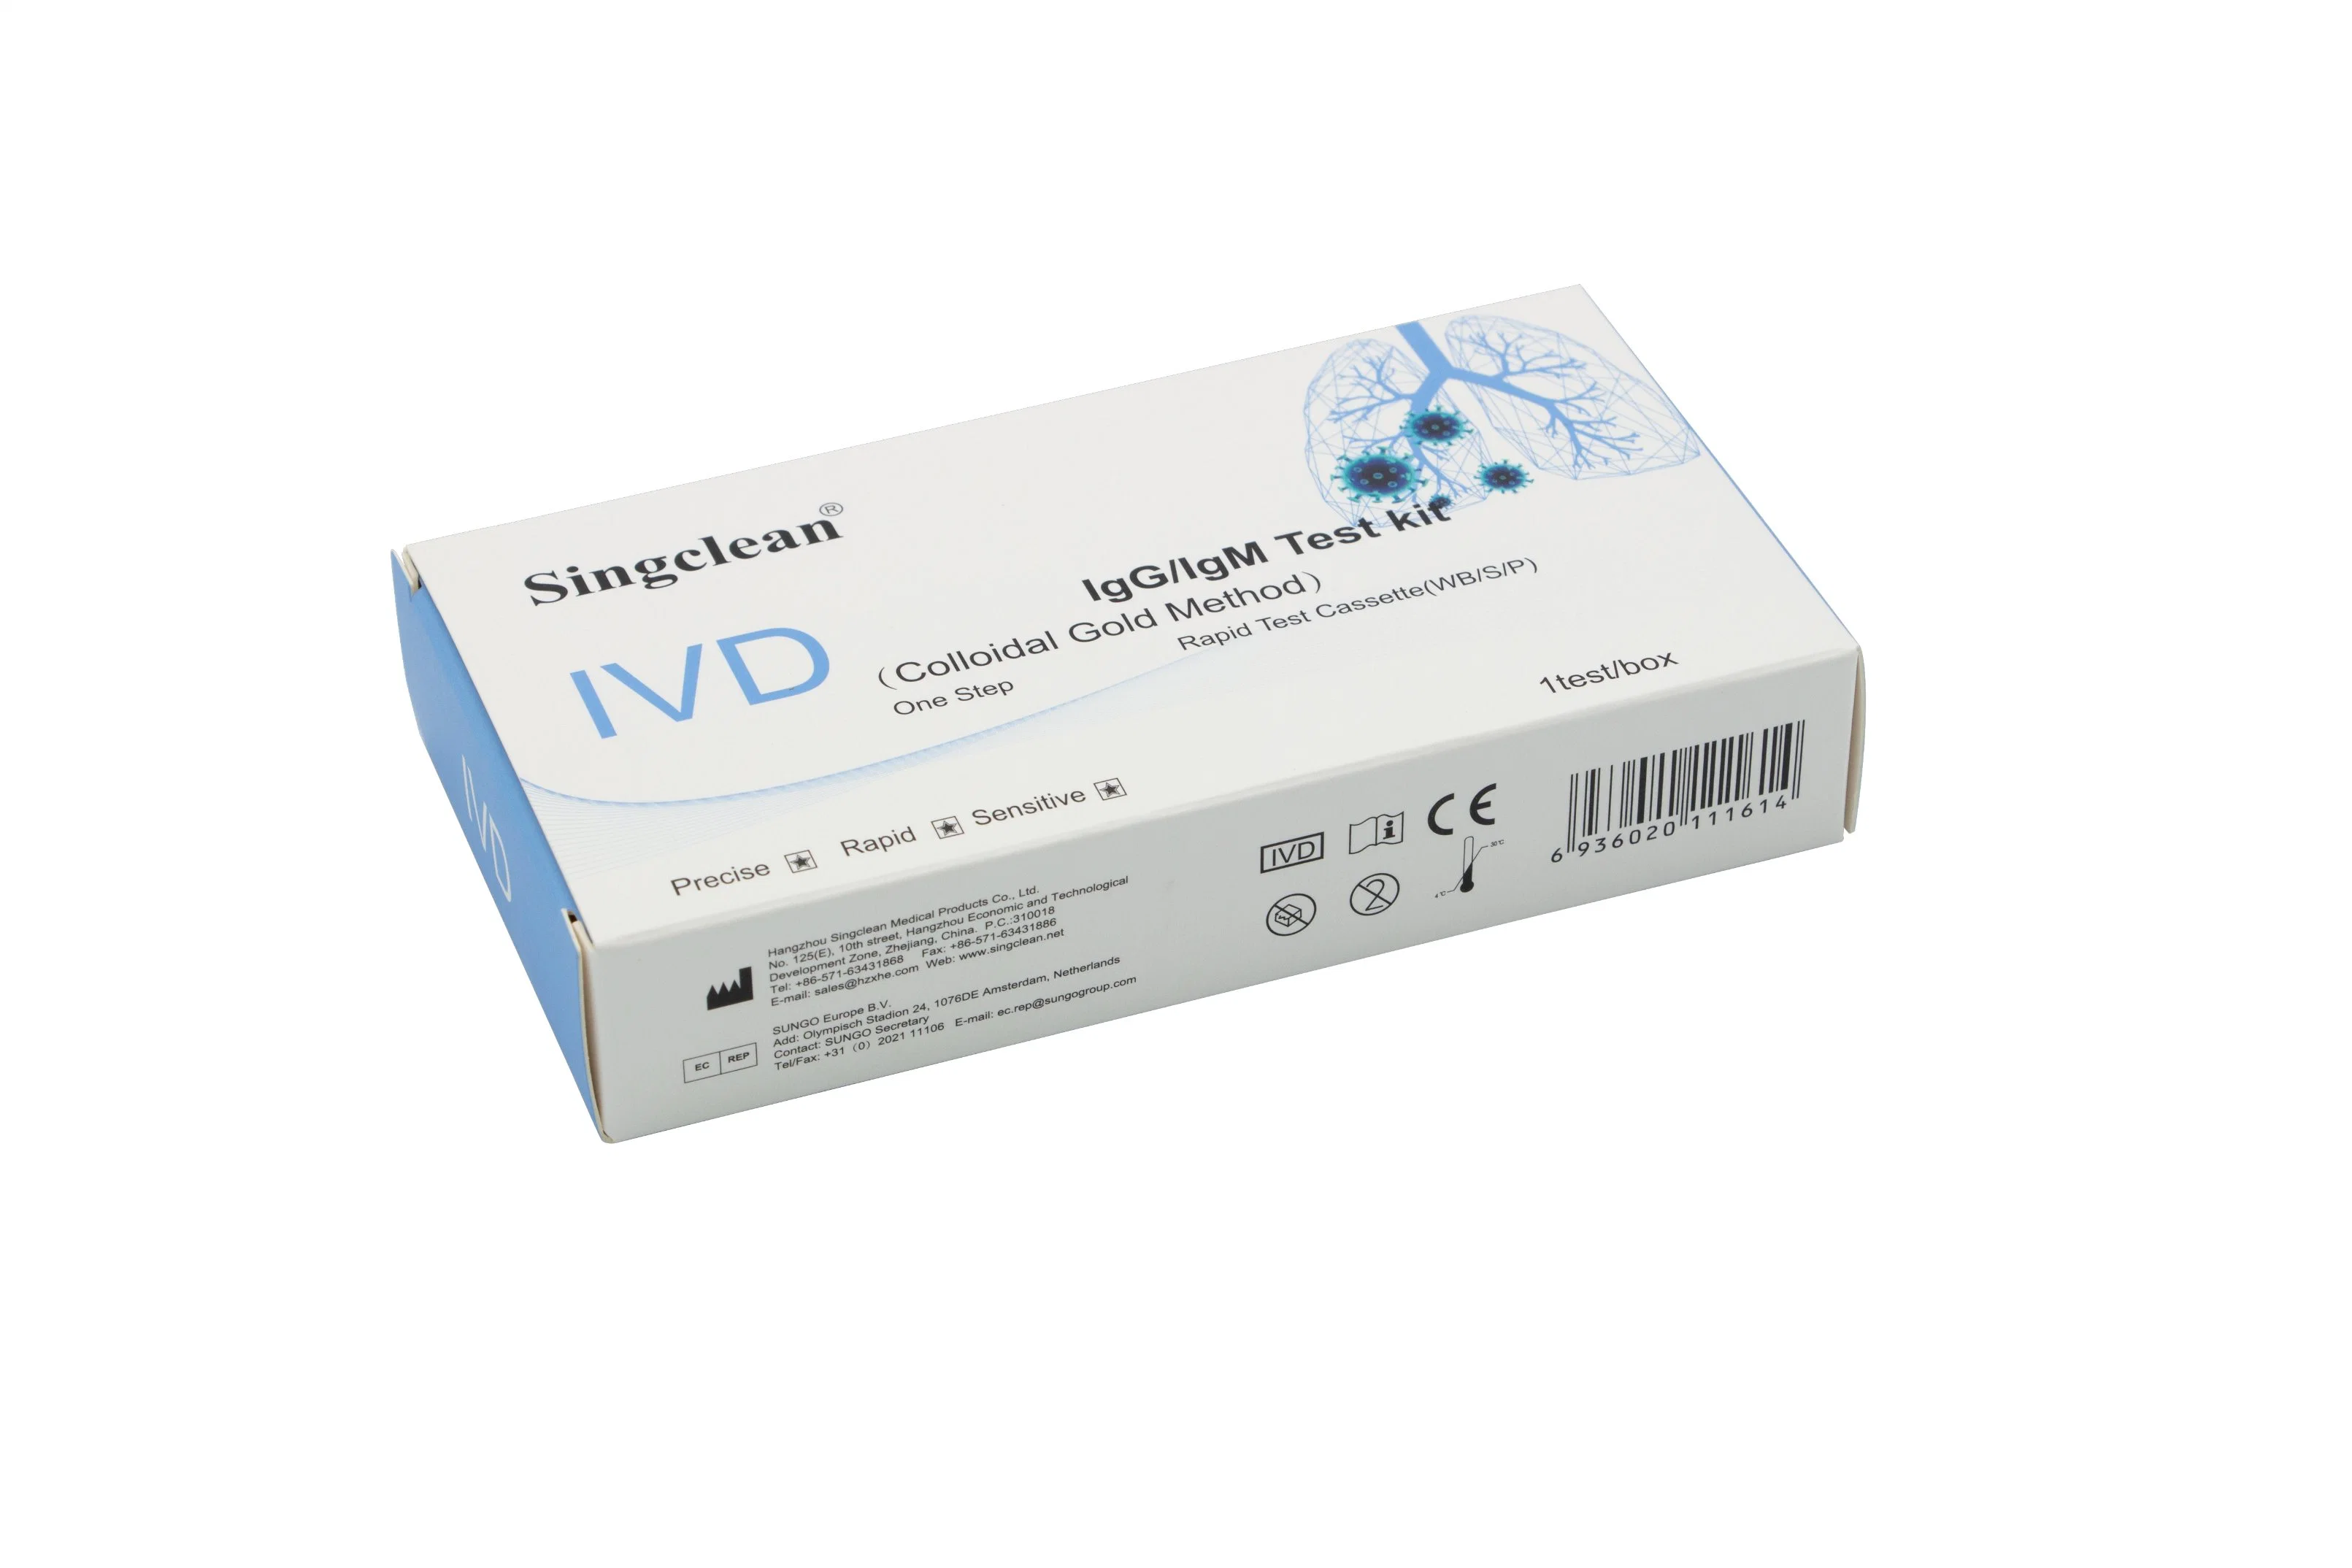 Singclean Quick Profile AG Diagnostic Igg/Igm Antibody Test Strip Kit (Colloidal Gold Method)